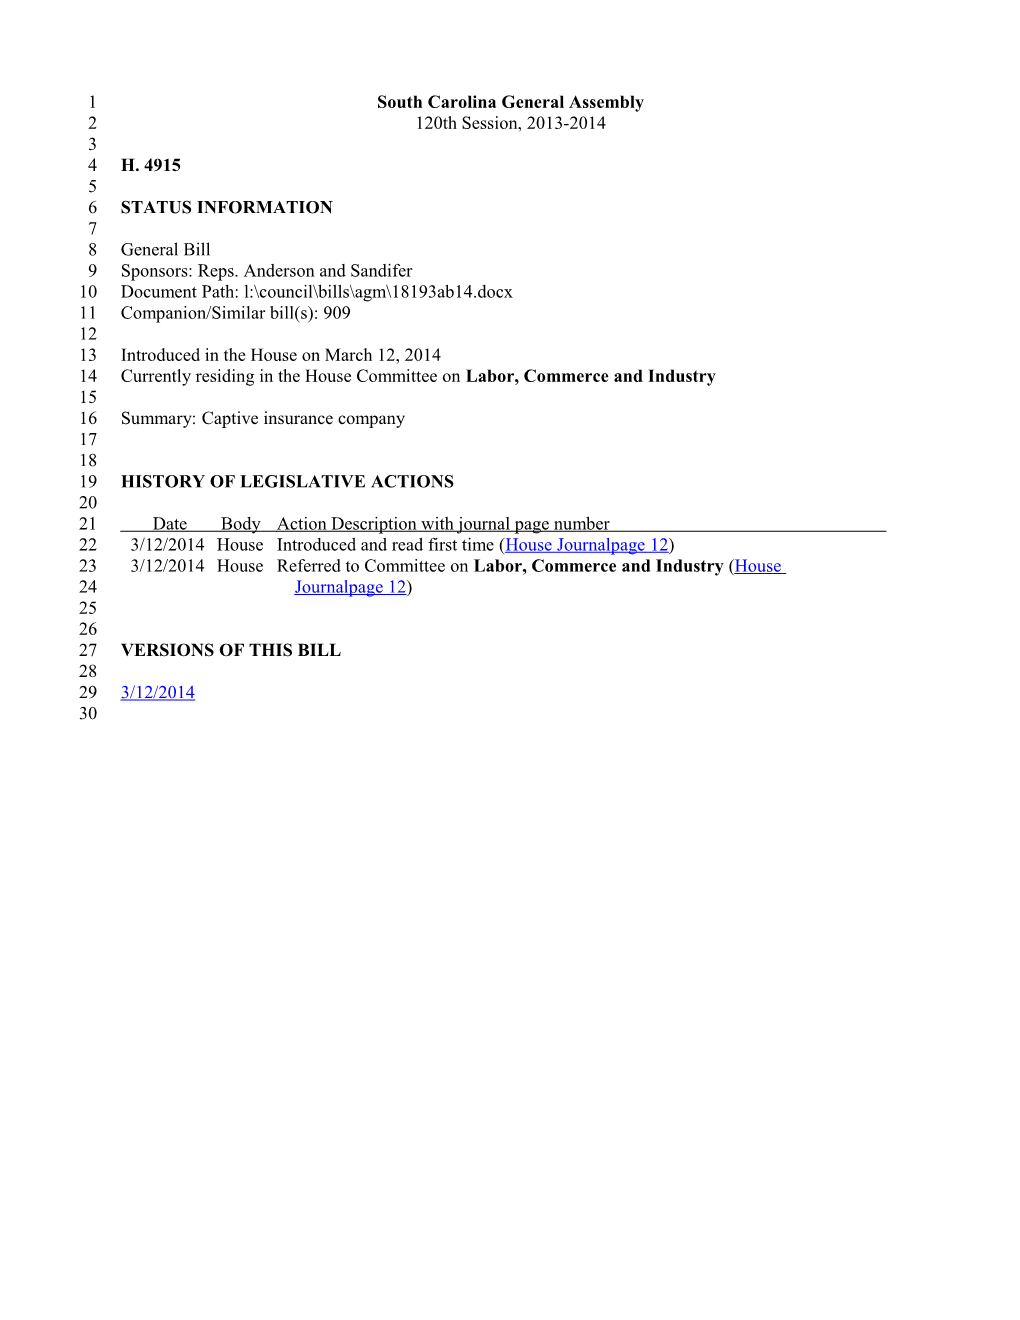 2013-2014 Bill 4915: Captive Insurance Company - South Carolina Legislature Online